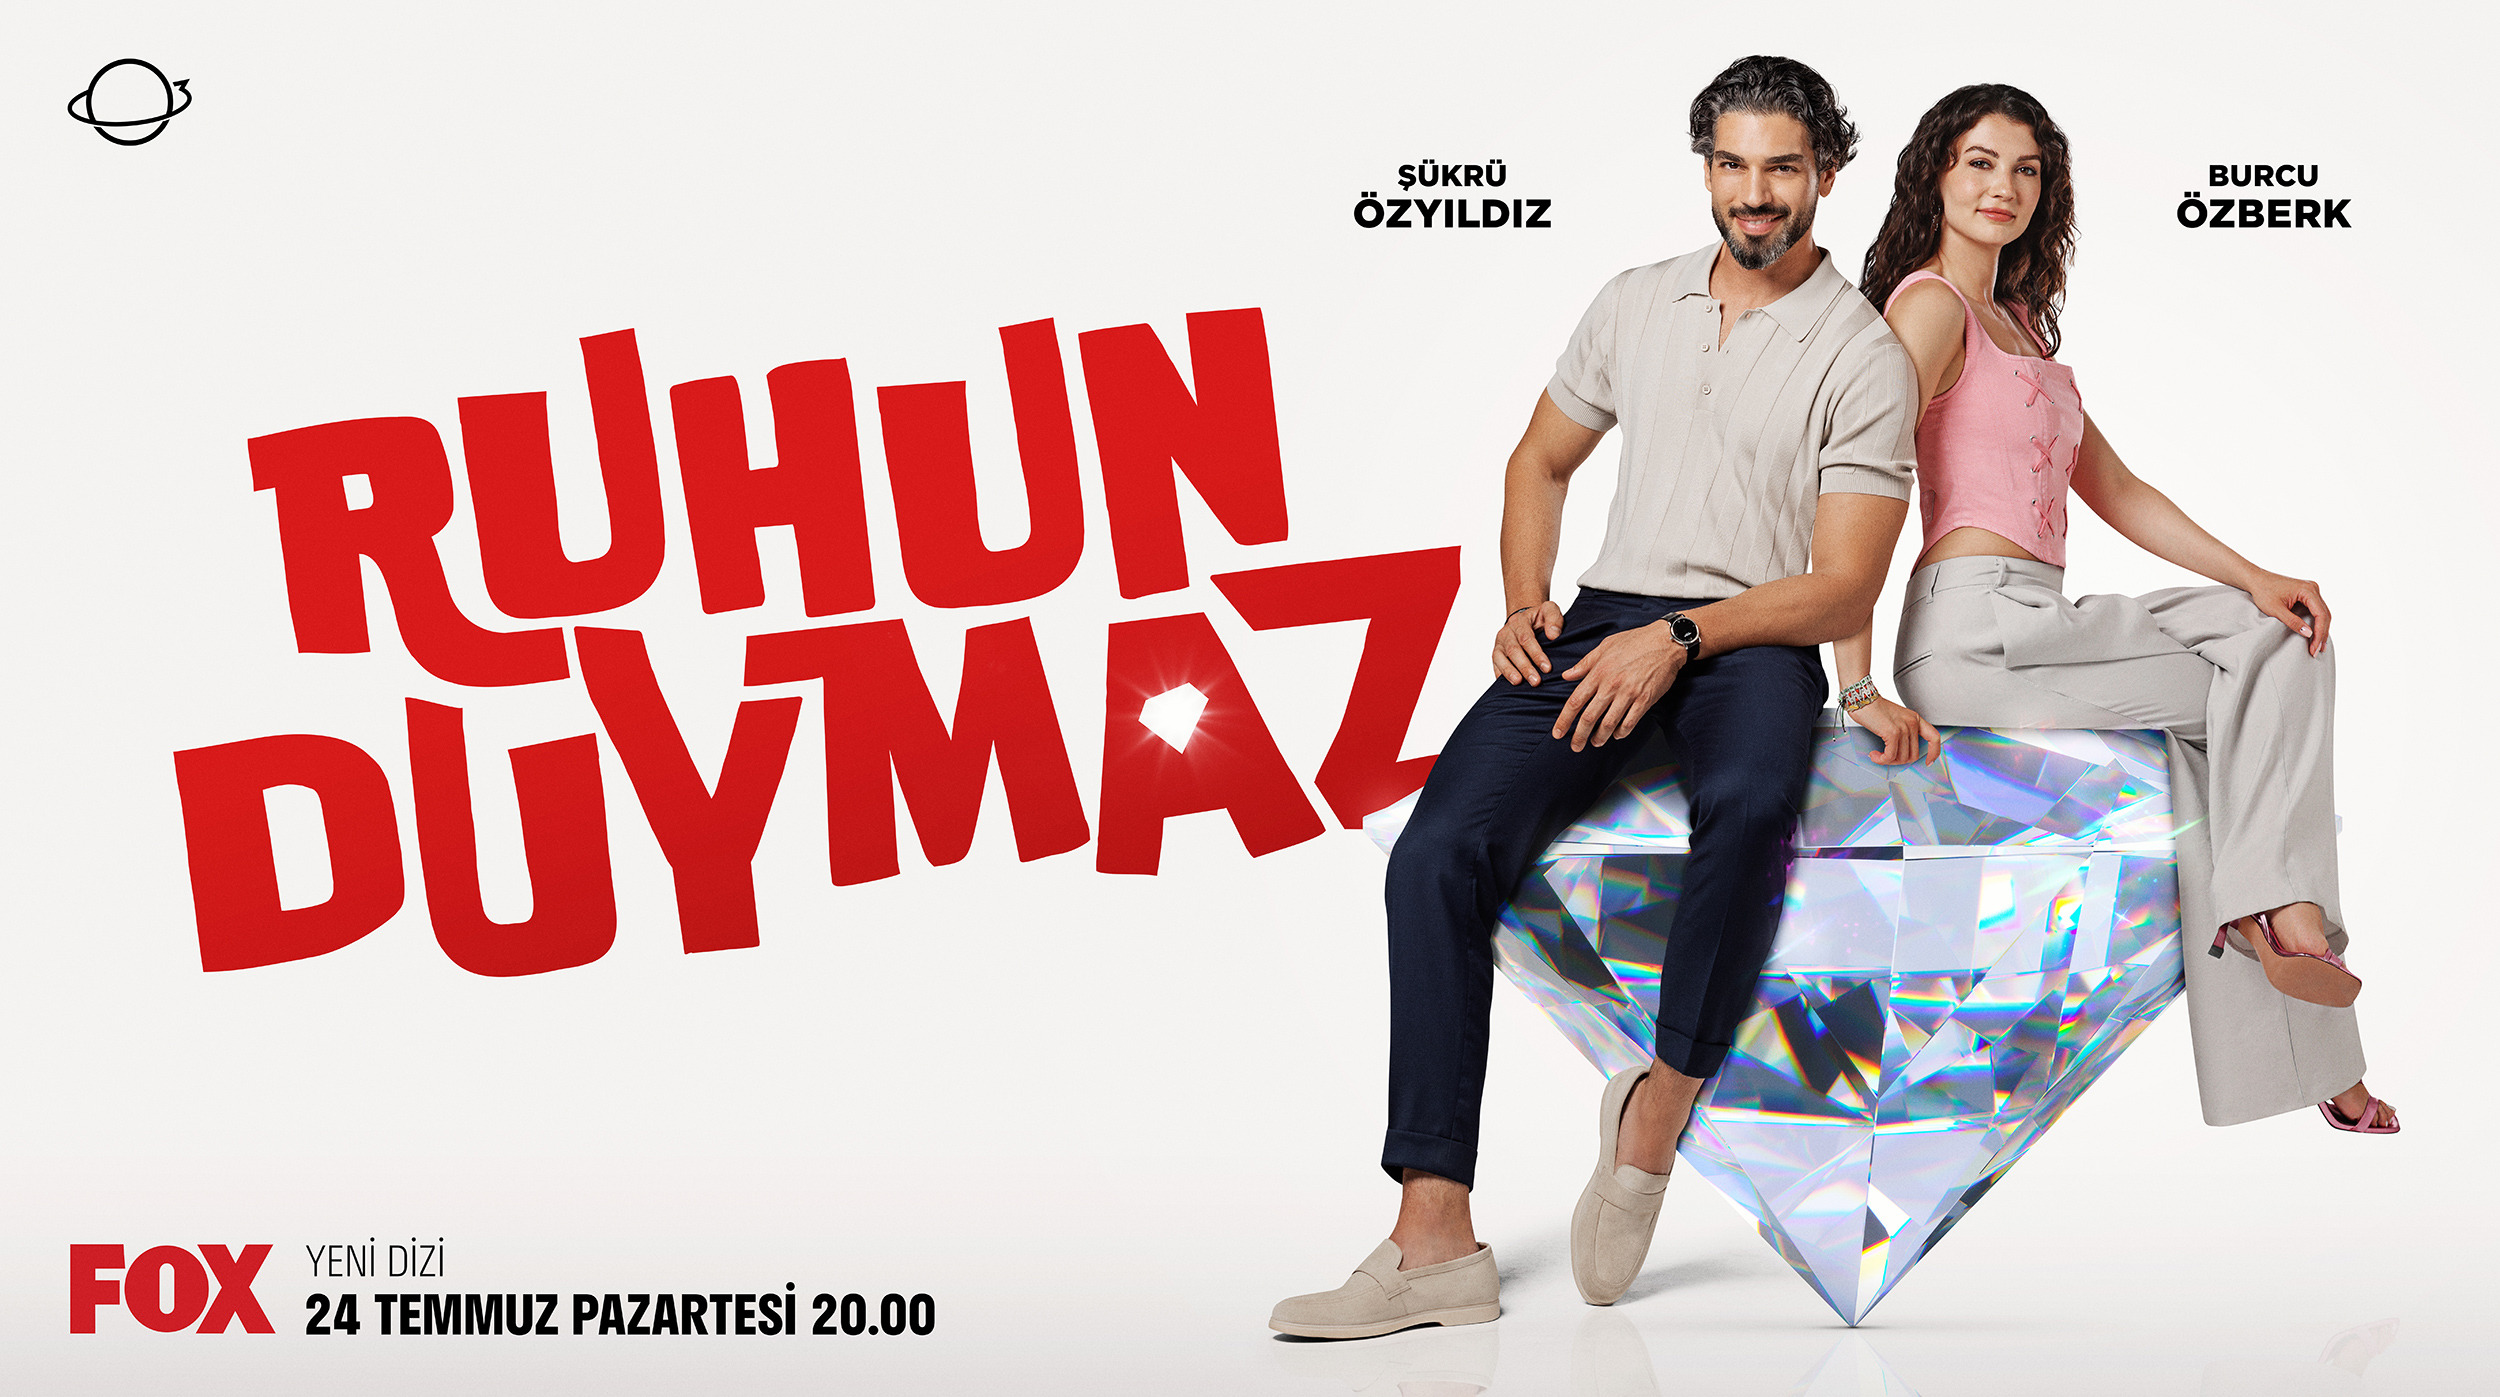 Mega Sized TV Poster Image for Ruhun Duymaz (#4 of 5)